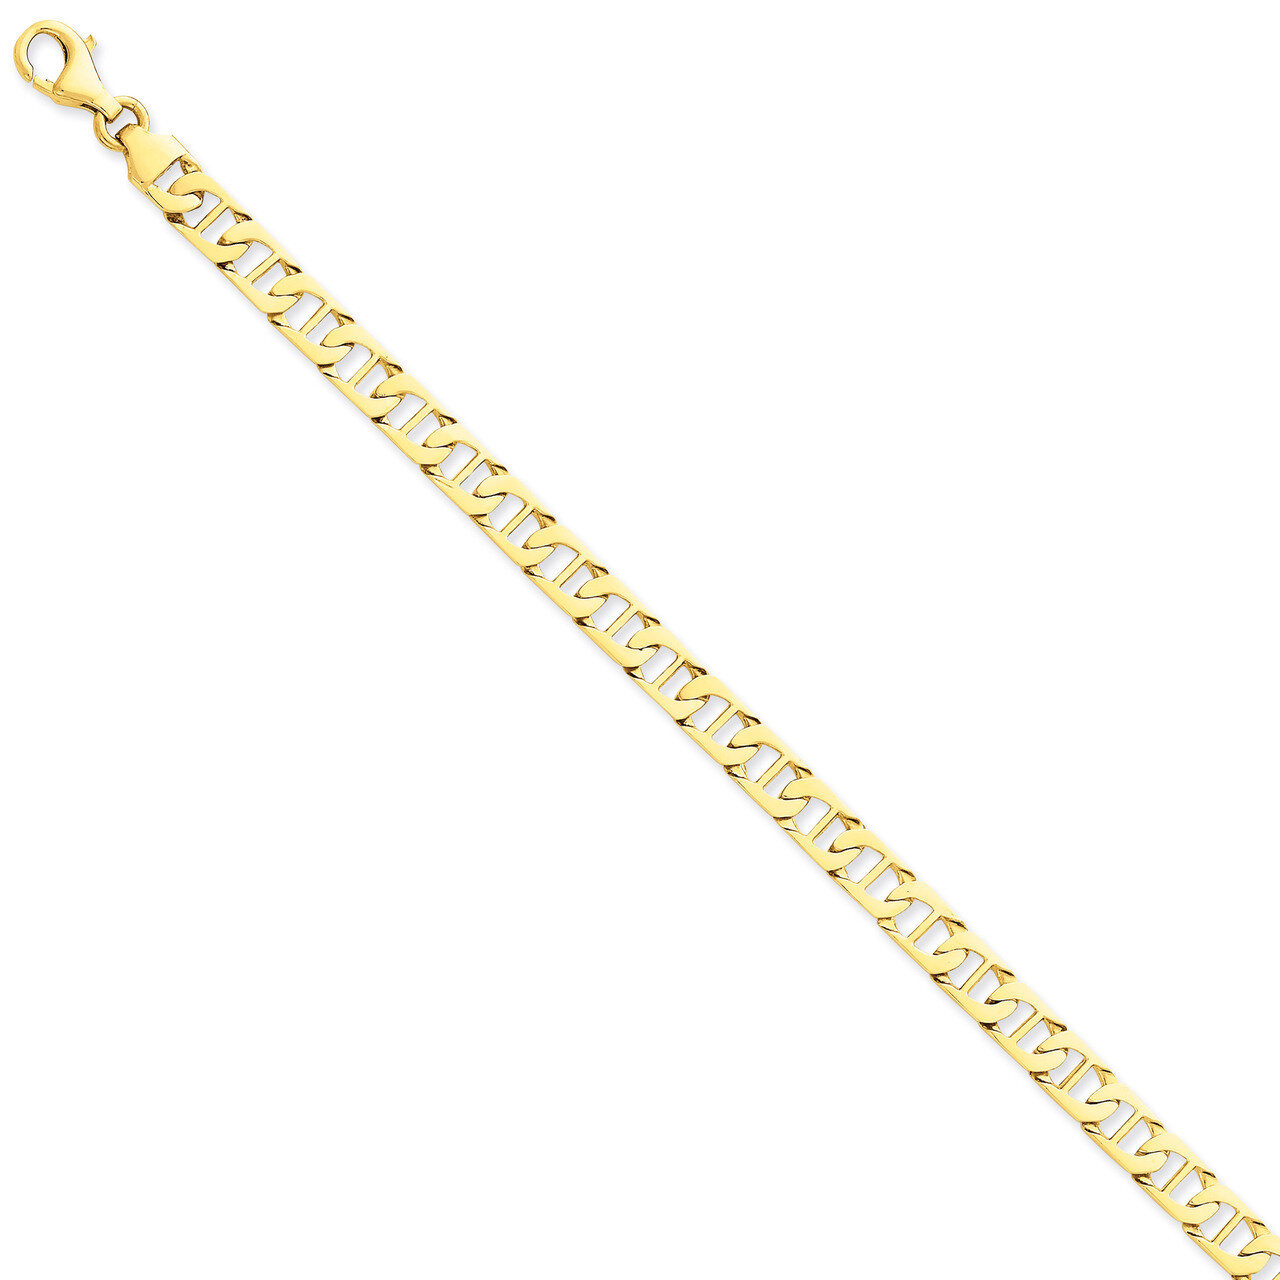 6.25mm Polished Fancy Anchor Link Chain 22 Inch 14k Gold LK678-22